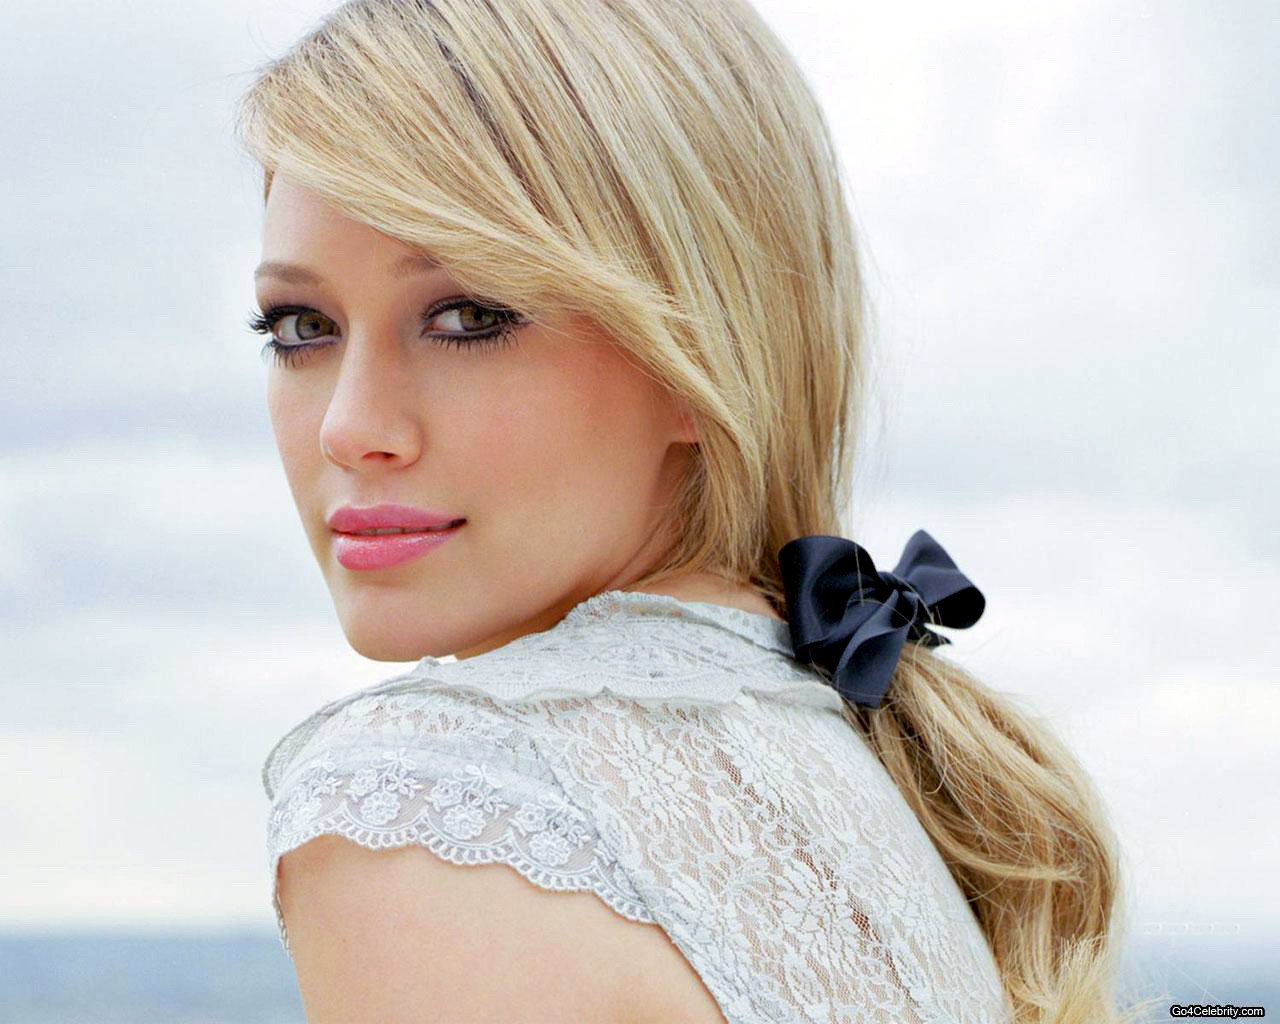 2. "Pretty Blonde Hair" by Hilary Duff - wide 4